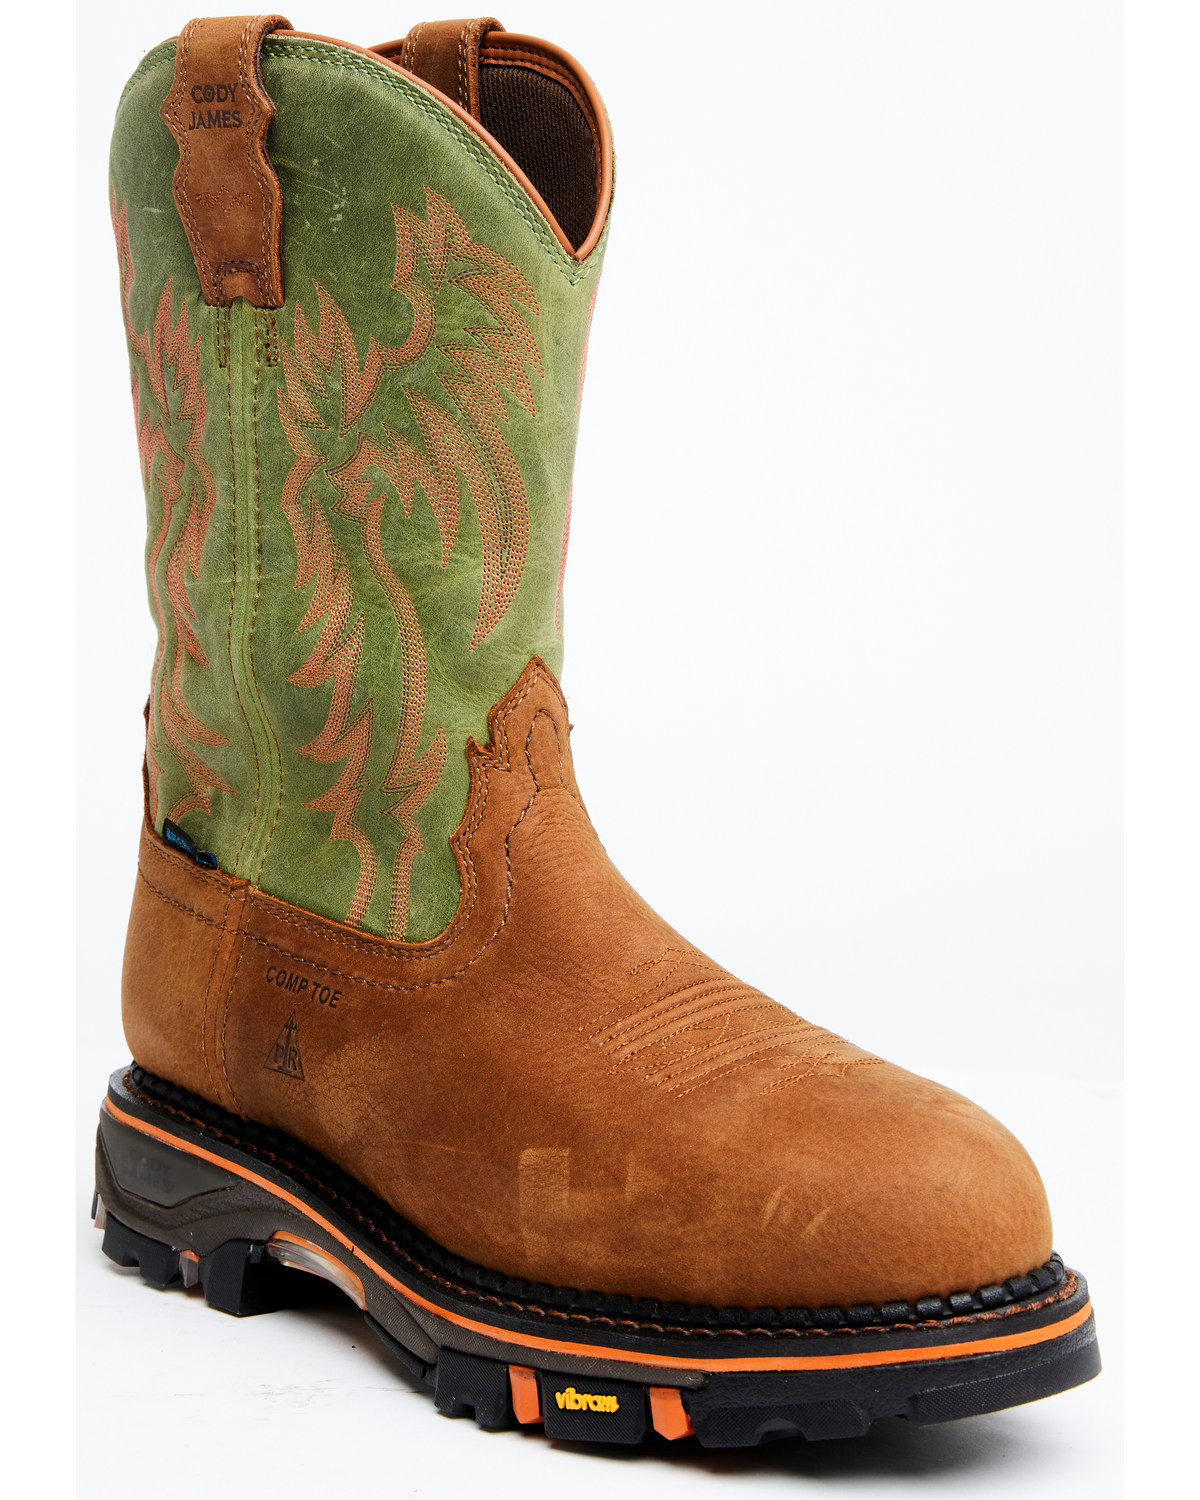 Cody James Men's Decimator 11" High Hopes Vibram Waterproof Work Boots - Composite Toe